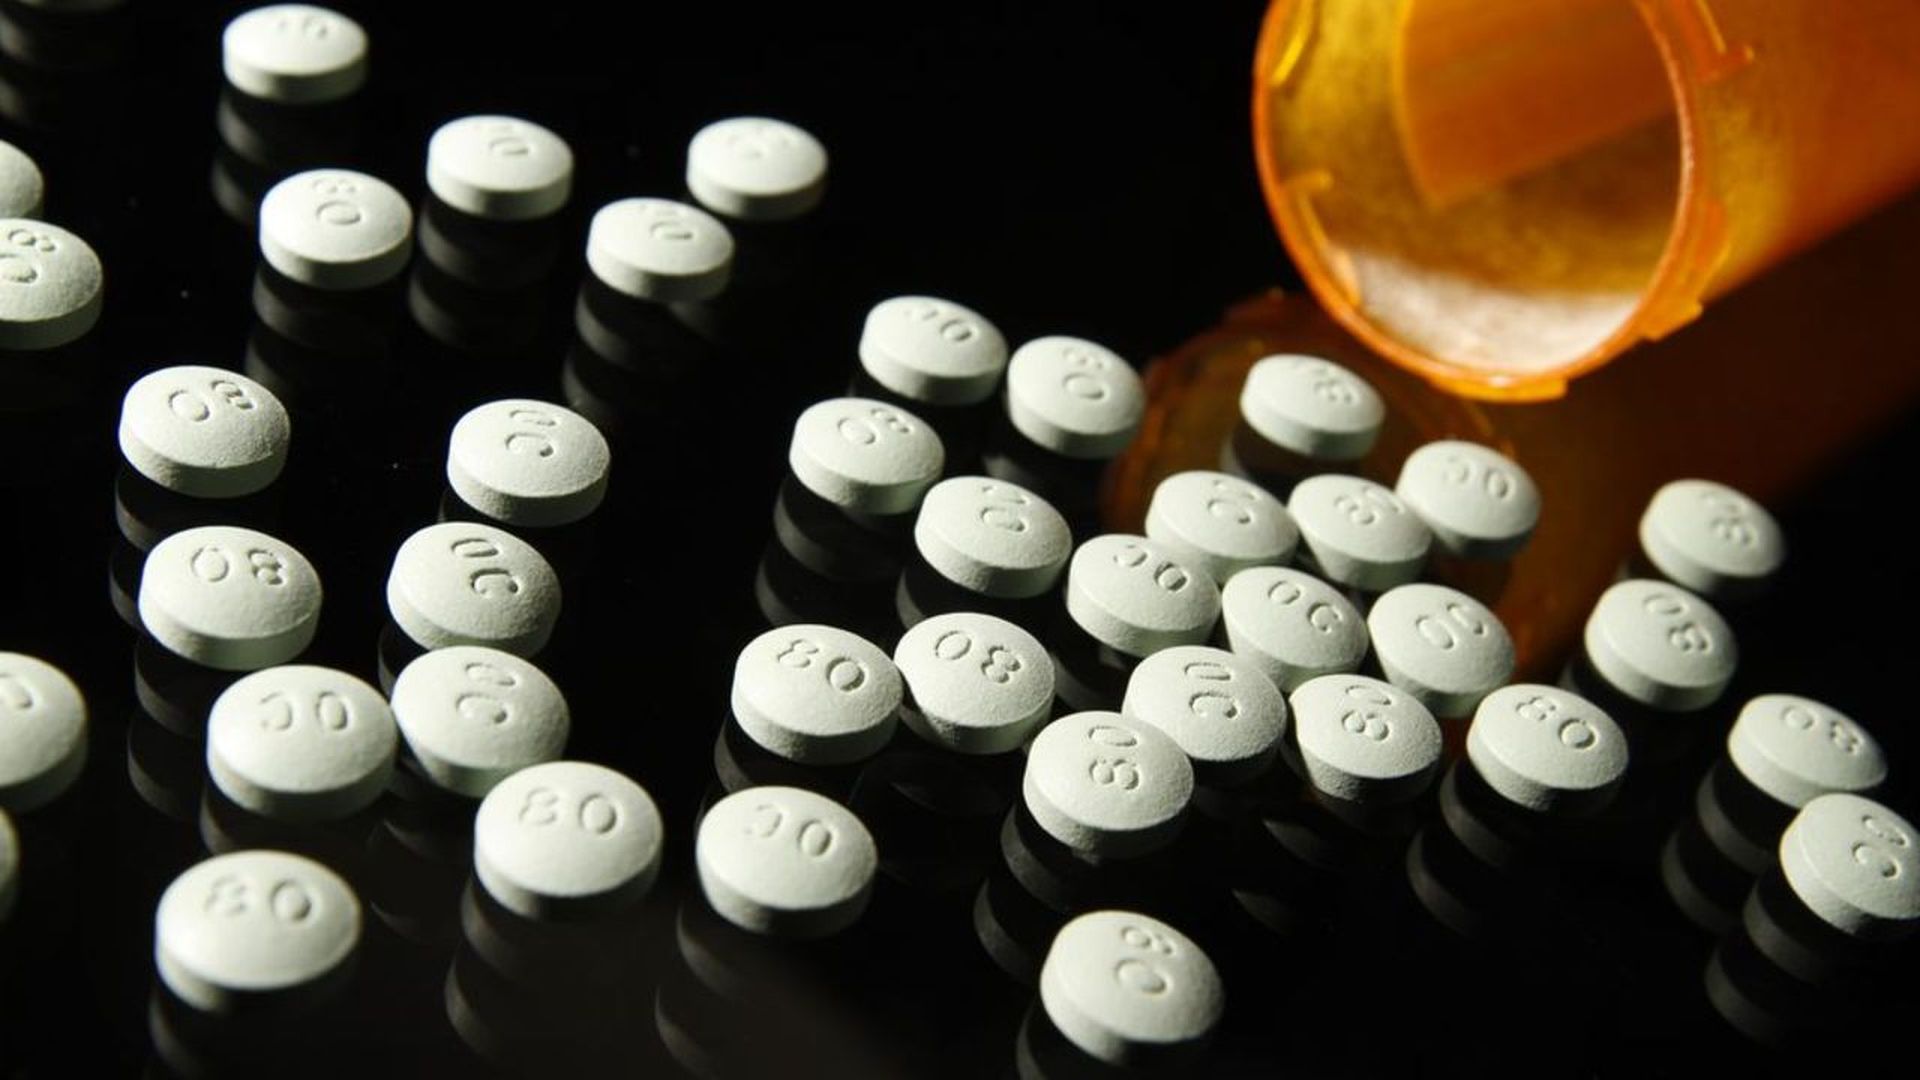 OxyContin pills. Photo: Liz O. Baylen/Los Angeles Times via Getty Images